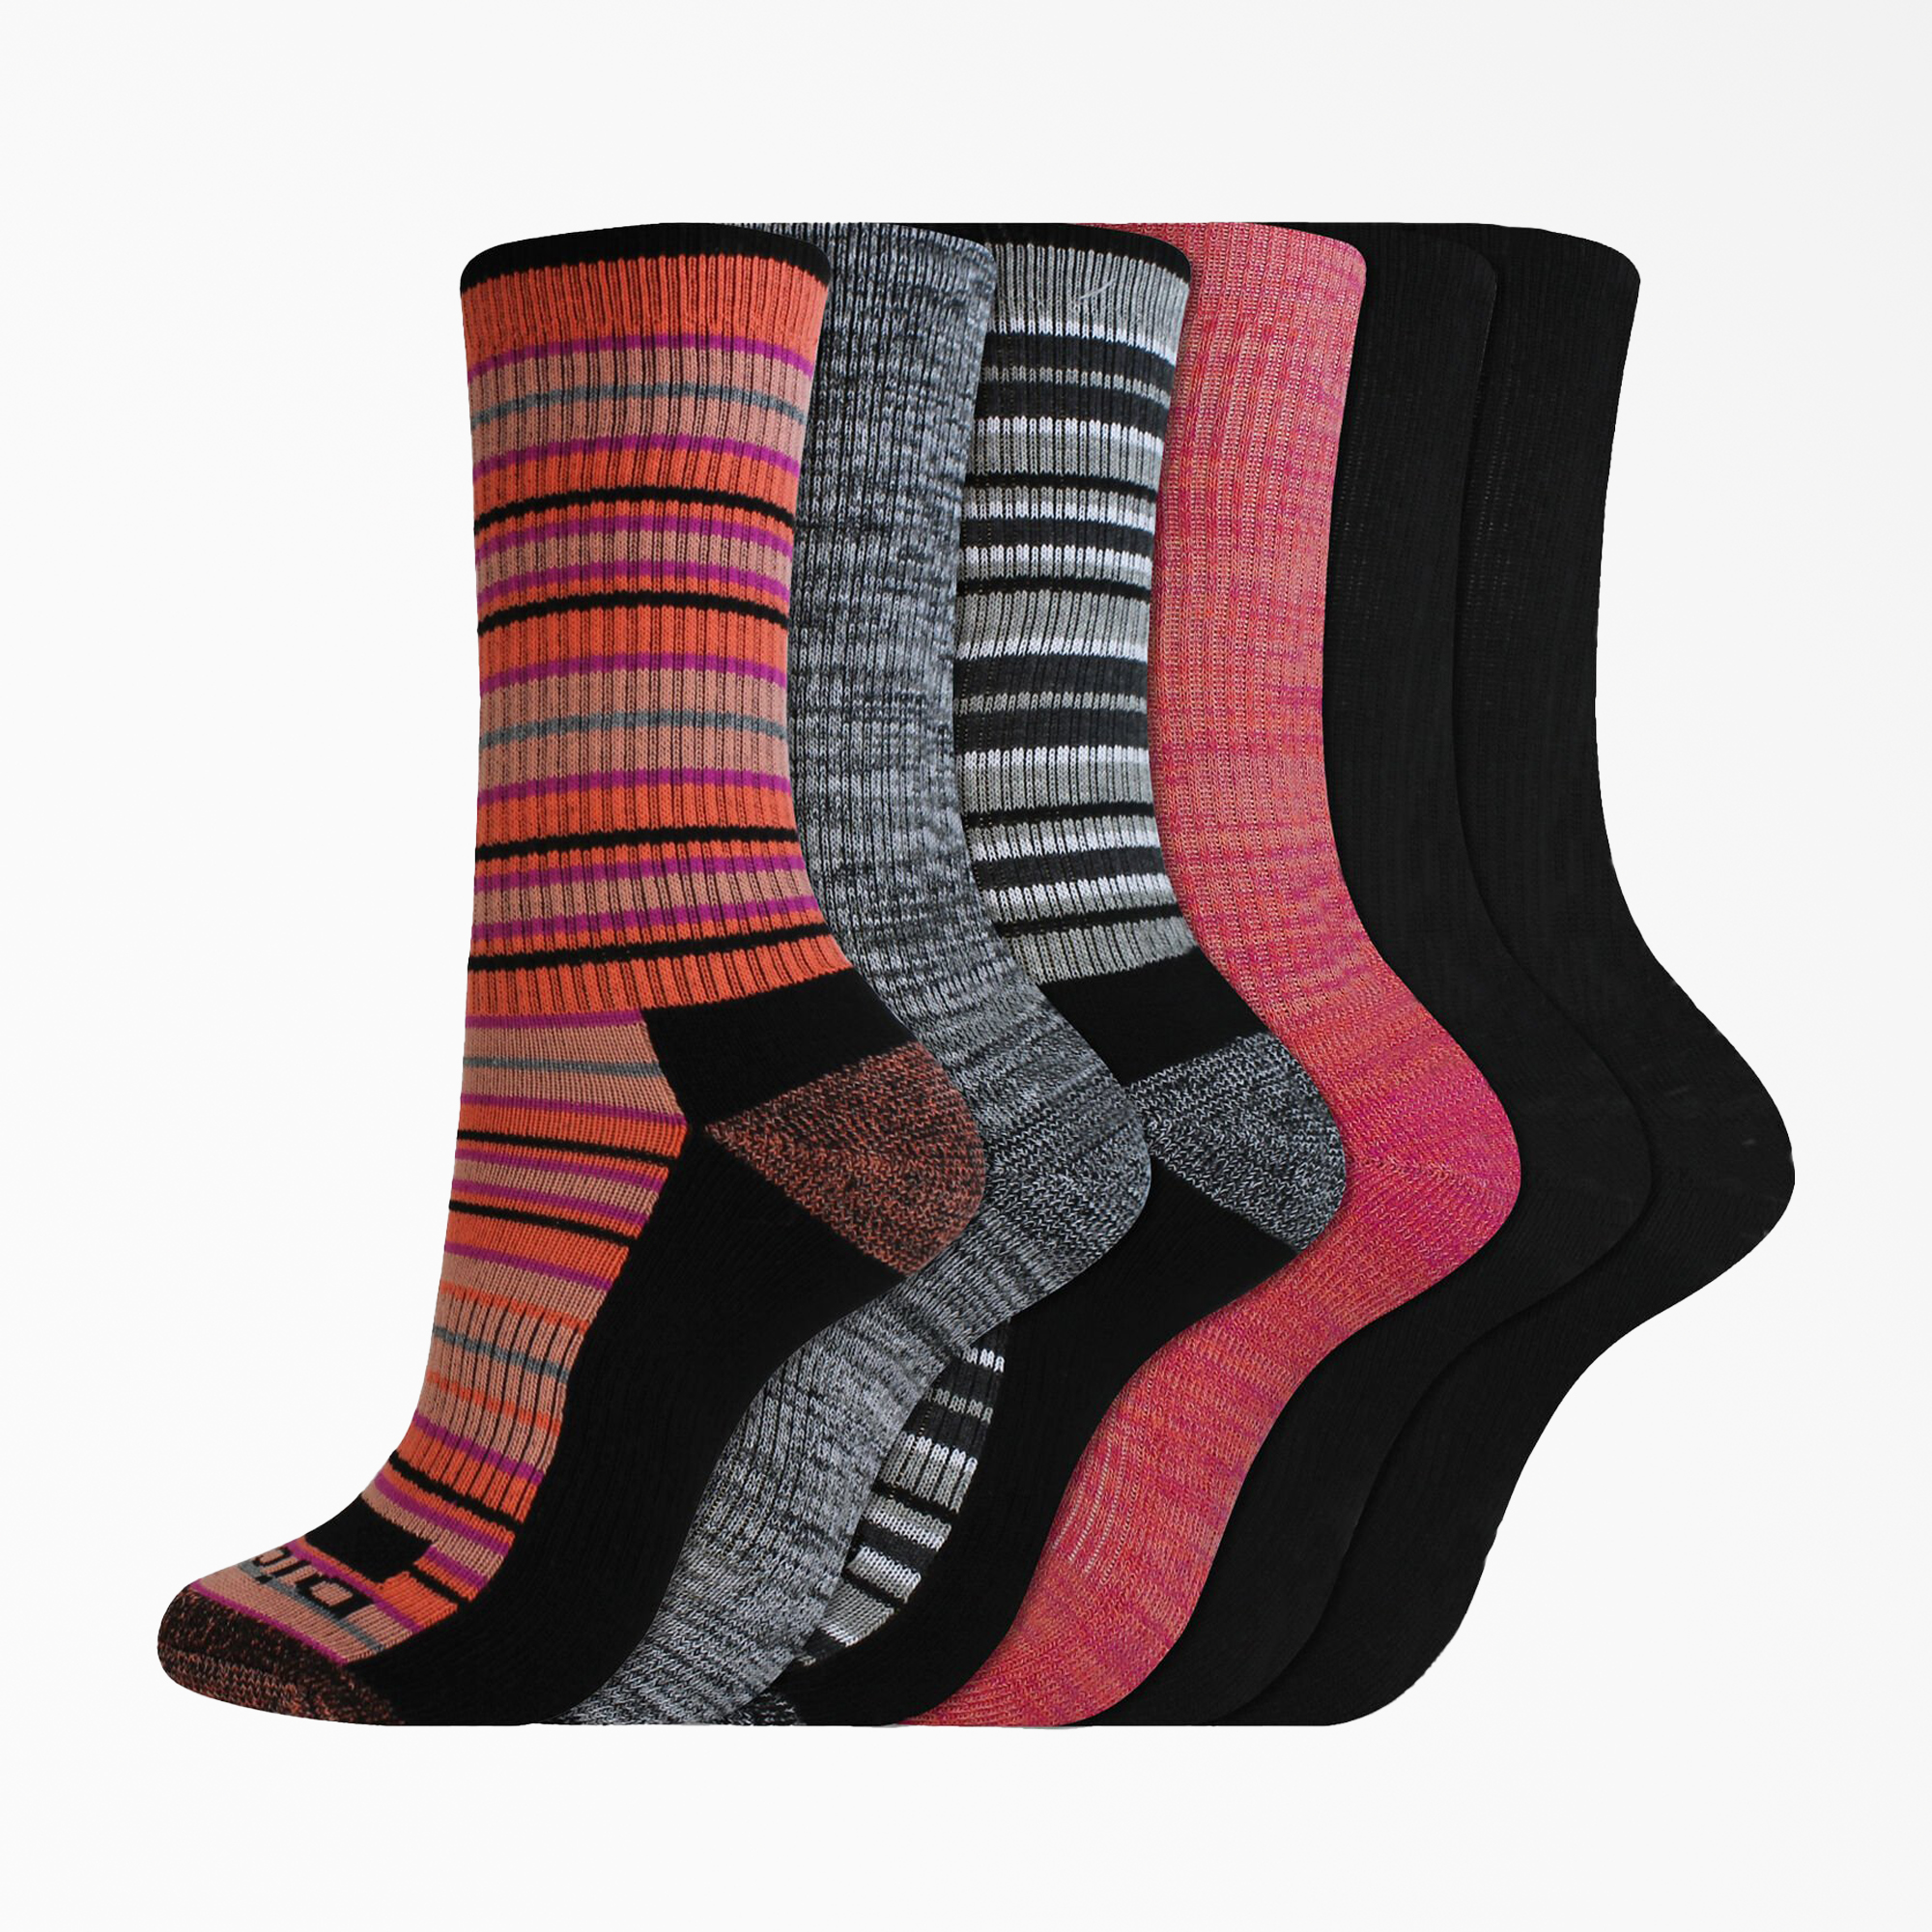 Women's Dri-Tech Moisture Control Striped Crew Socks, 6-Pack, Size 6-9 - Black (BK)